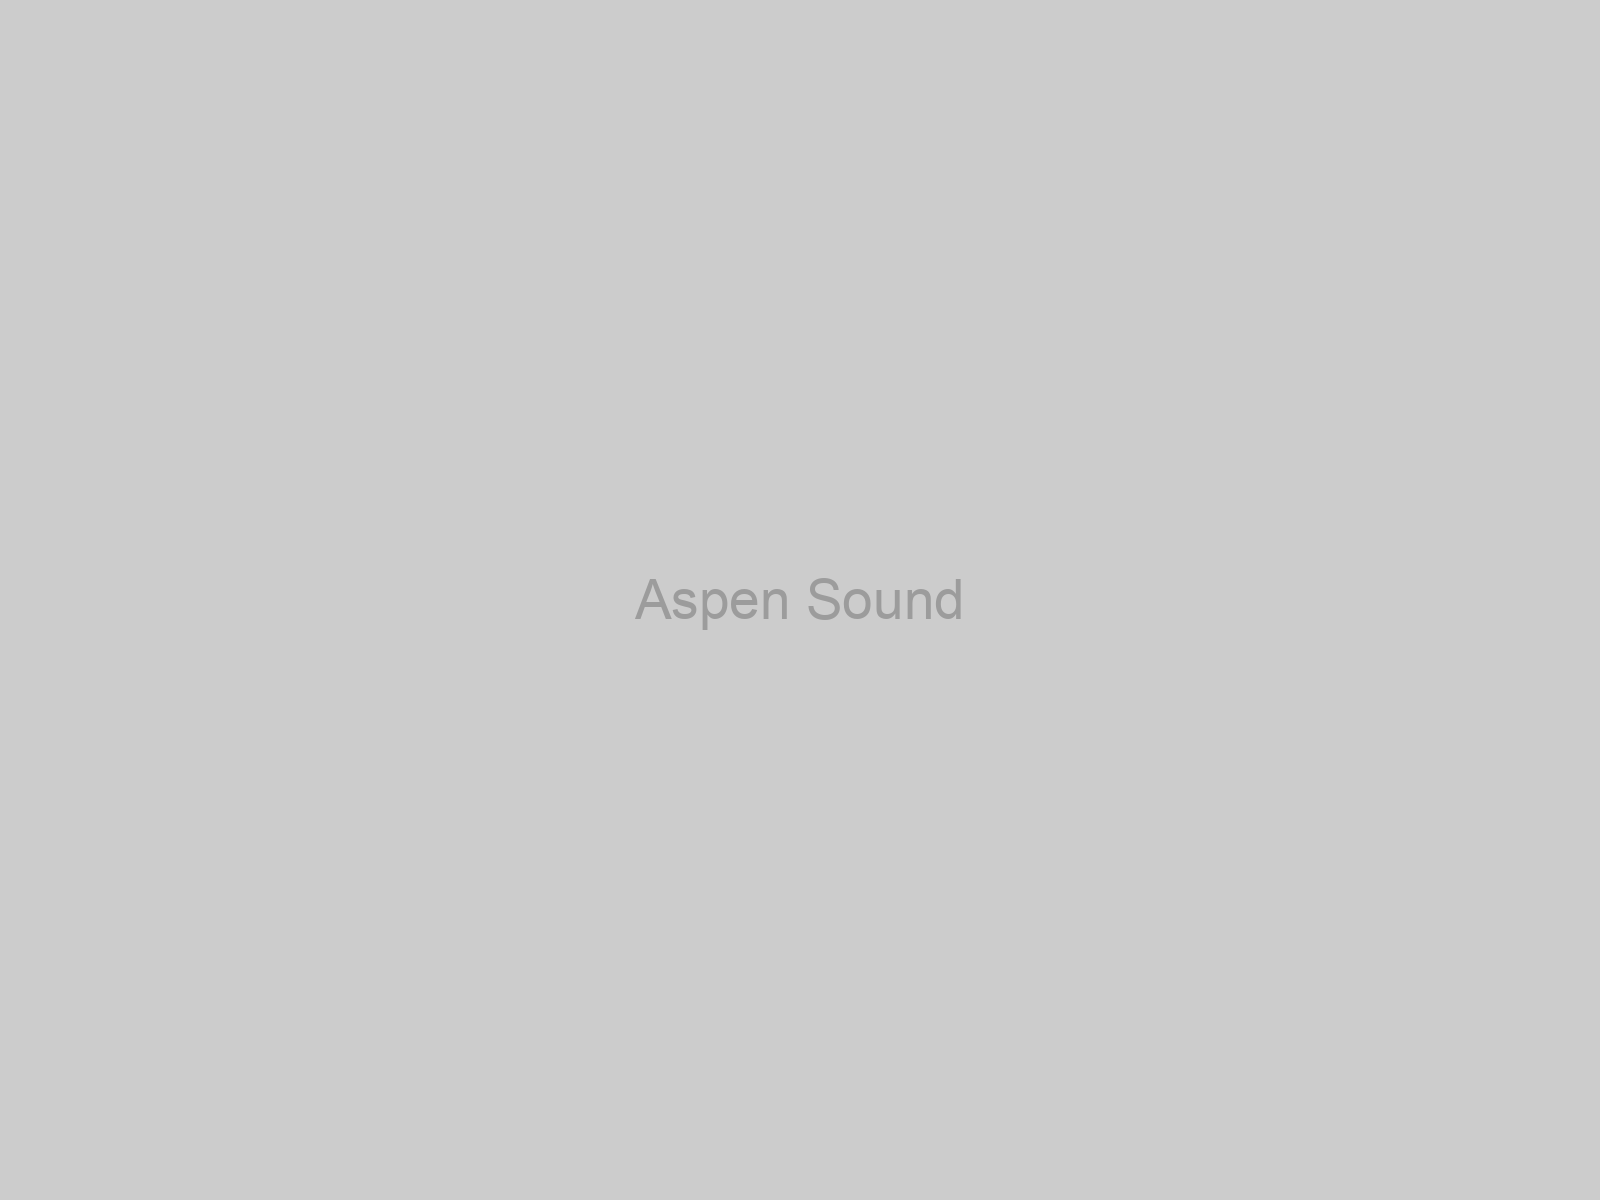 Aspen Sound